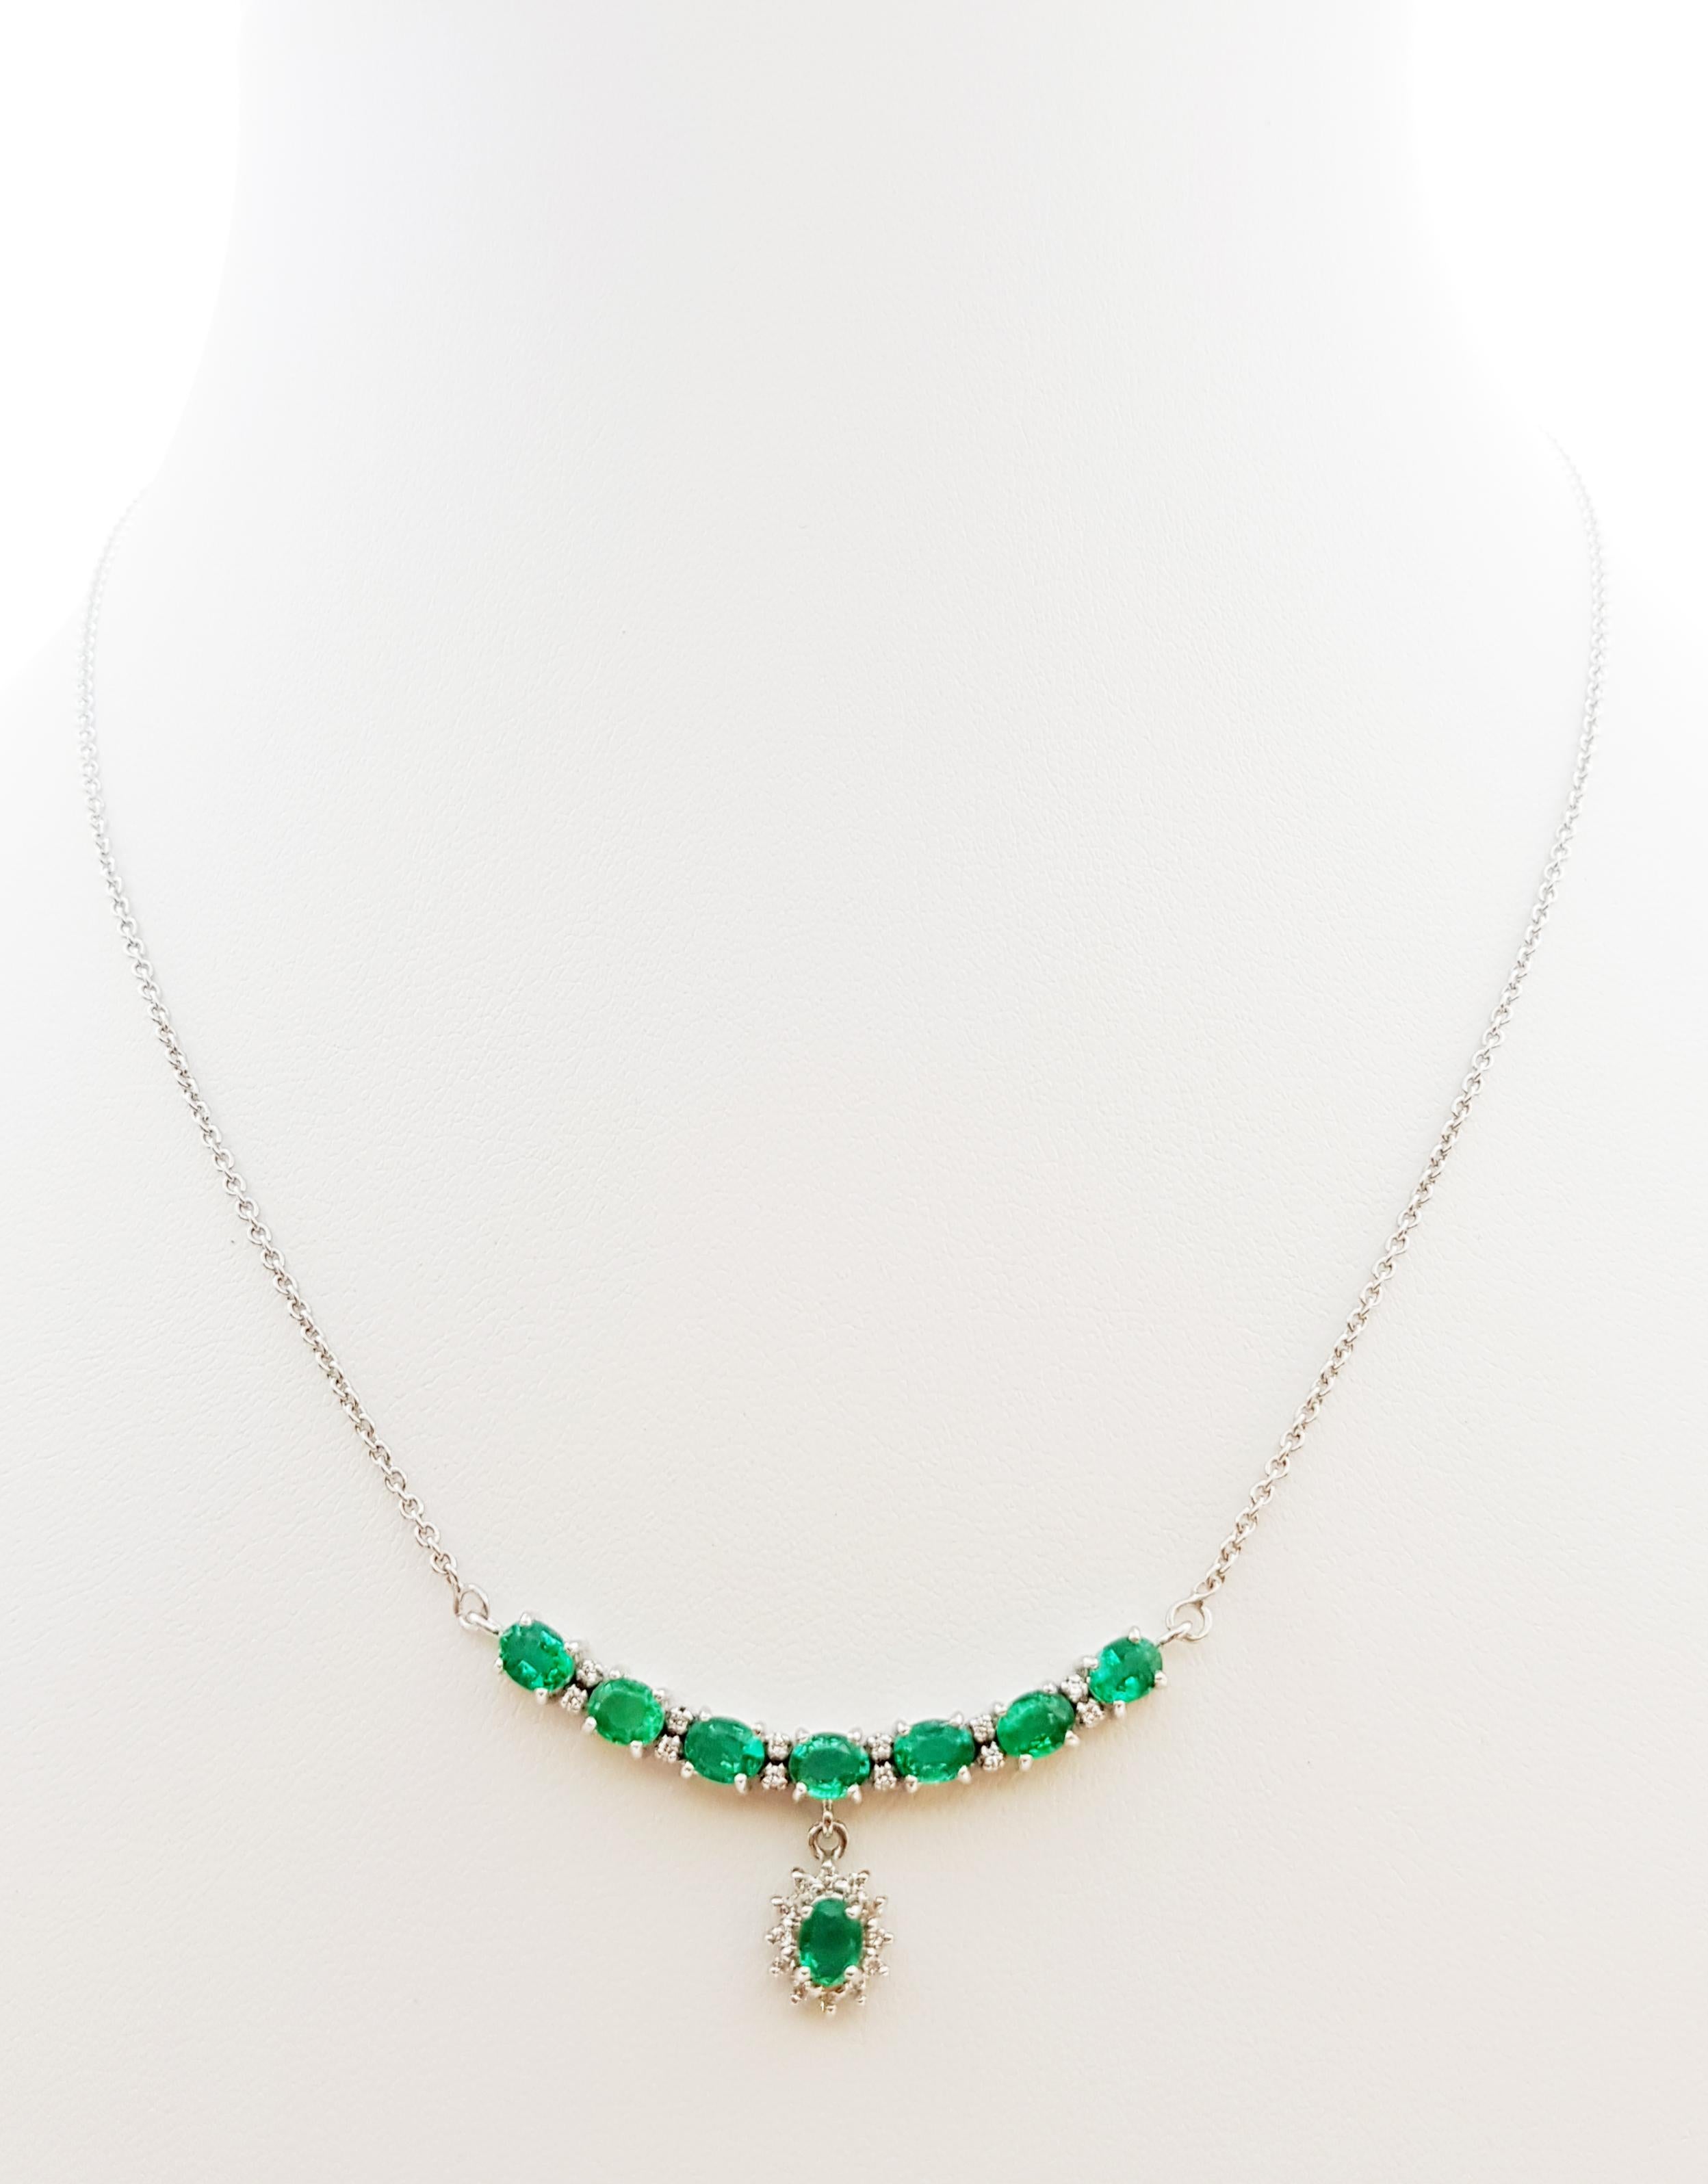 Emerald 1.77 carats with Diamond 0.15 carat Necklace set in 18 Karat Gold Settings

Width: 1.6 cm 
Length: 45.5 cm
Total Weight: 6.54 grams

